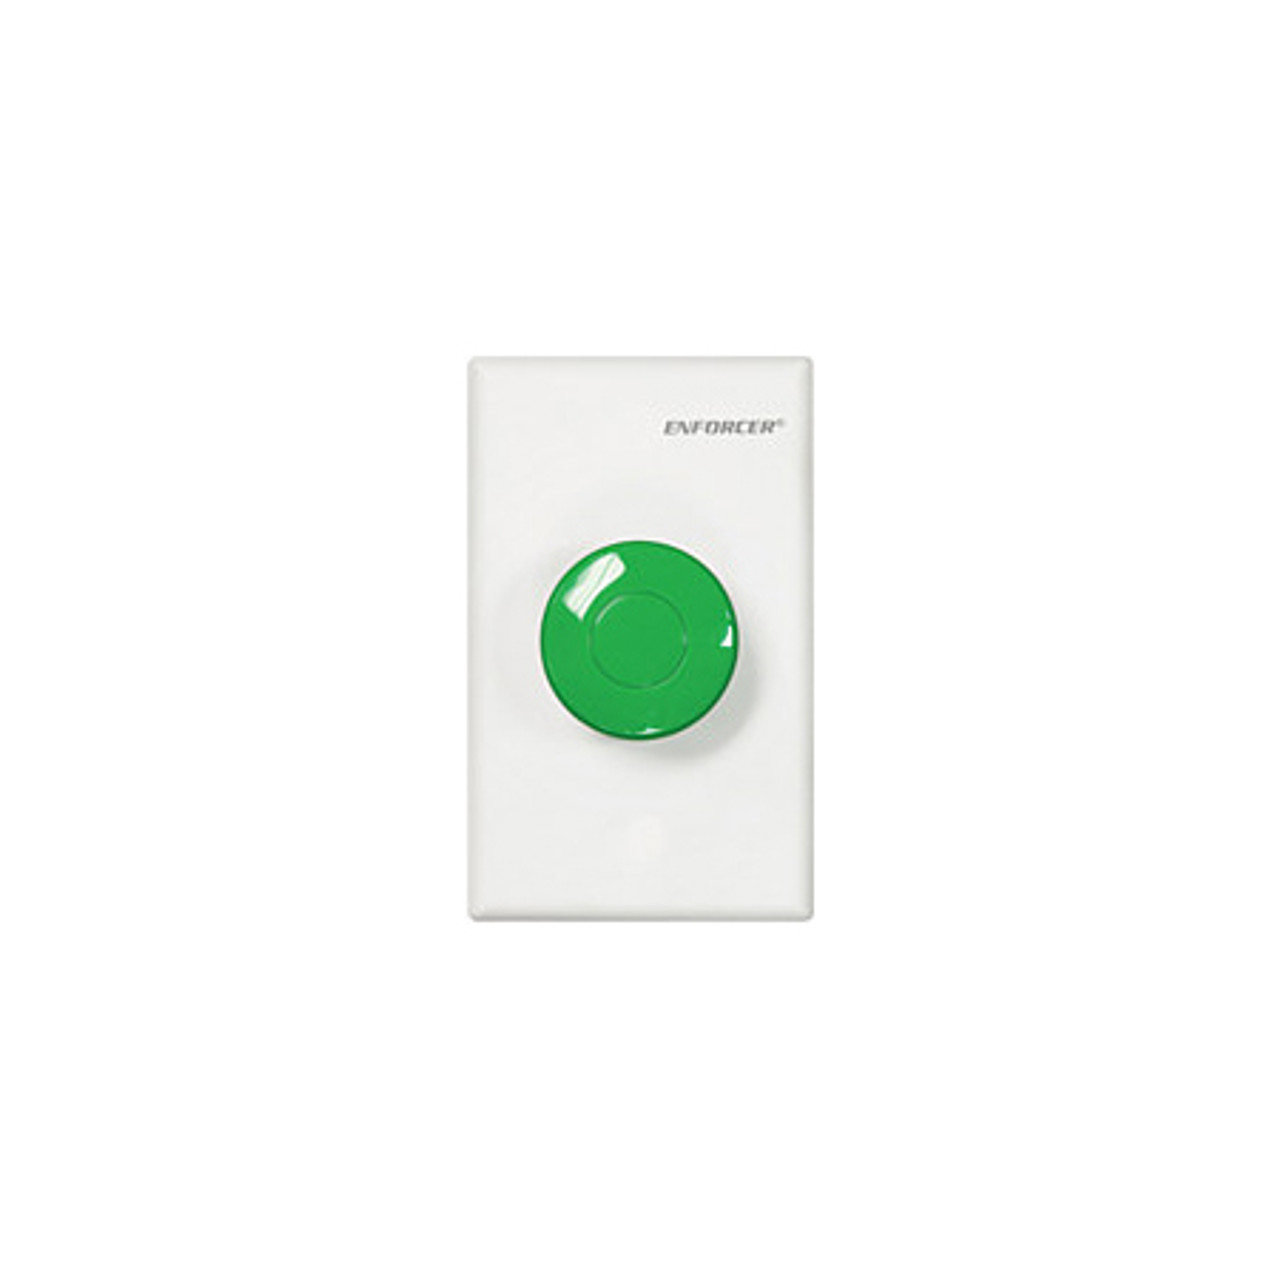 White SD-7217GWQ Seco-Larm Enforcer Green Mushroom Button Push-to-Exit Plate 